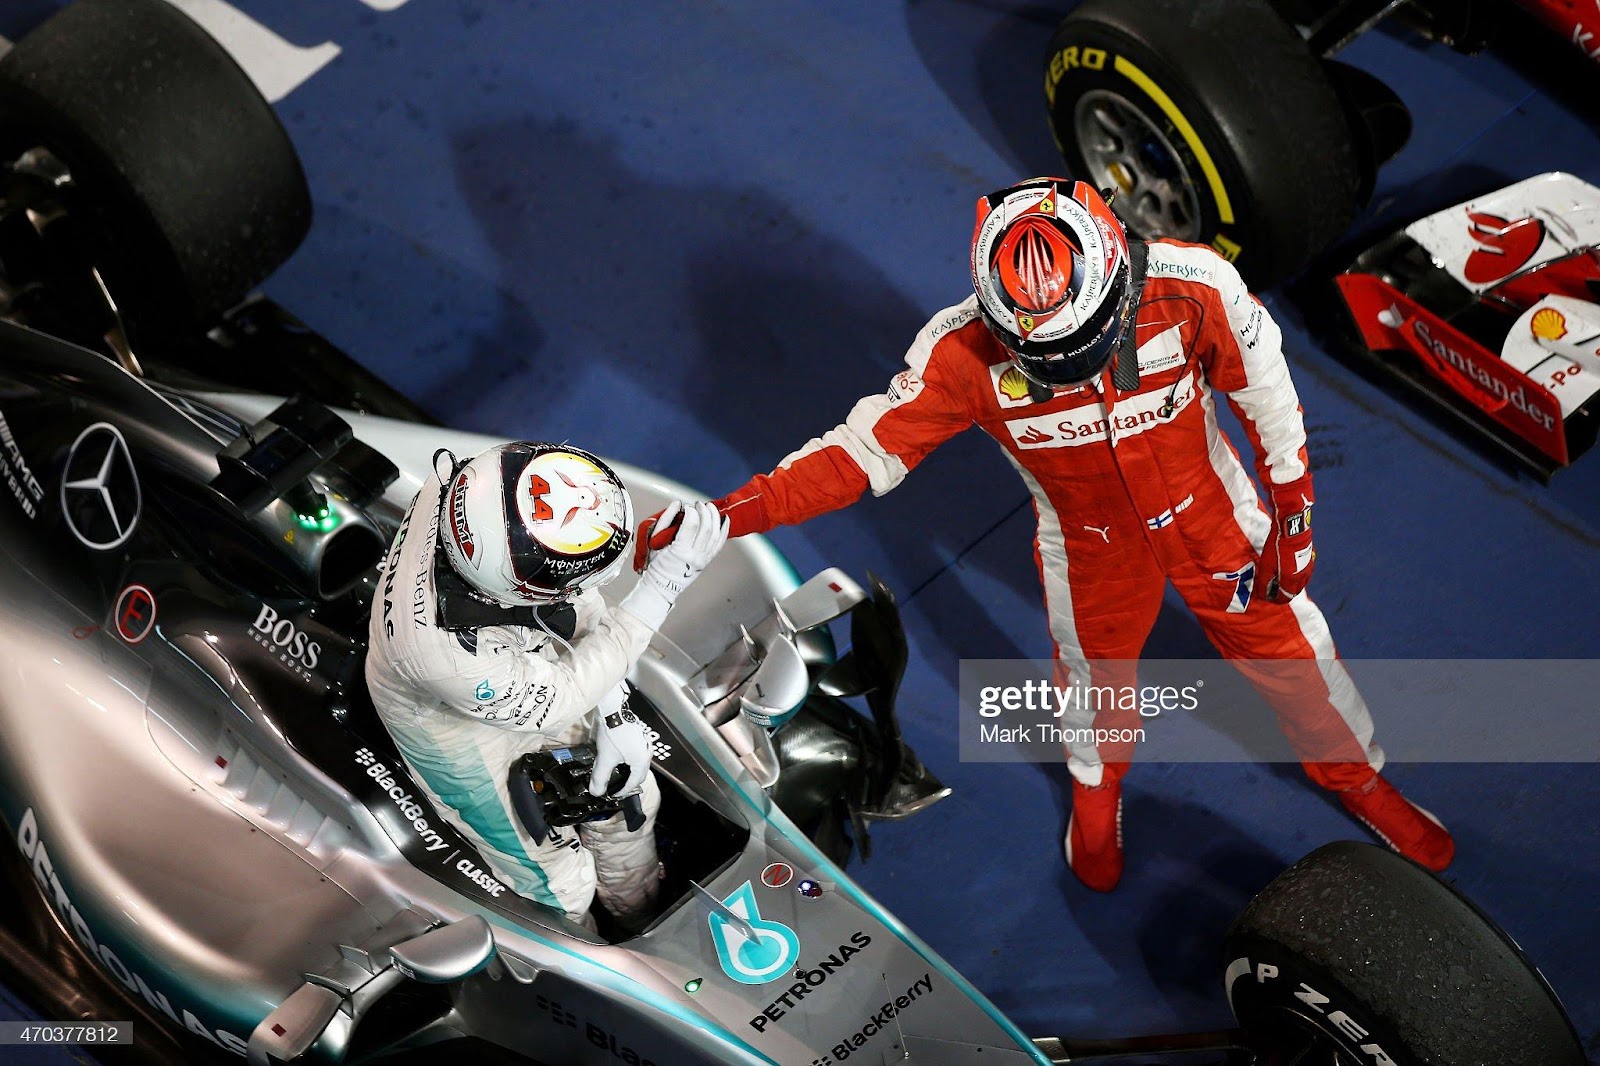 Race winner Lewis Hamilton is congratulated by Kimi Raikkonen in Parc Ferme, following the Bahrain F1 Grand Prix at Bahrain International Circuit on April 19, 2015.